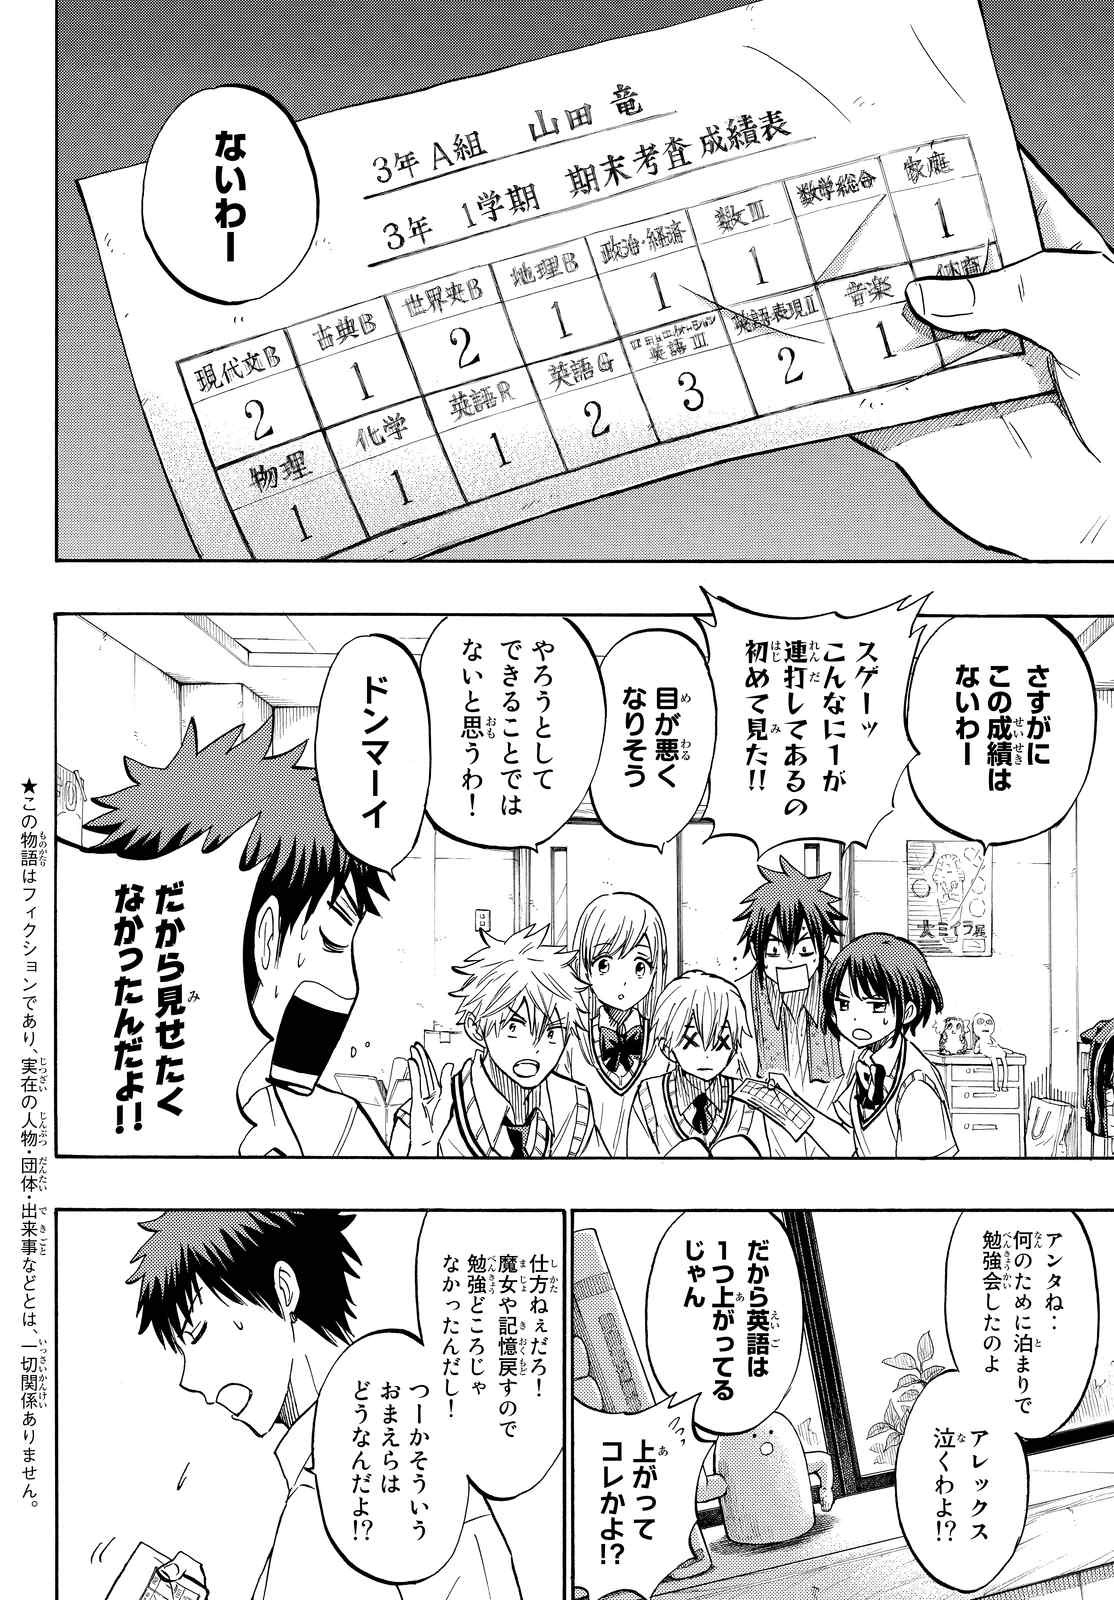 Yamada-kun to 7-nin no Majo - Chapter 226 - Page 2